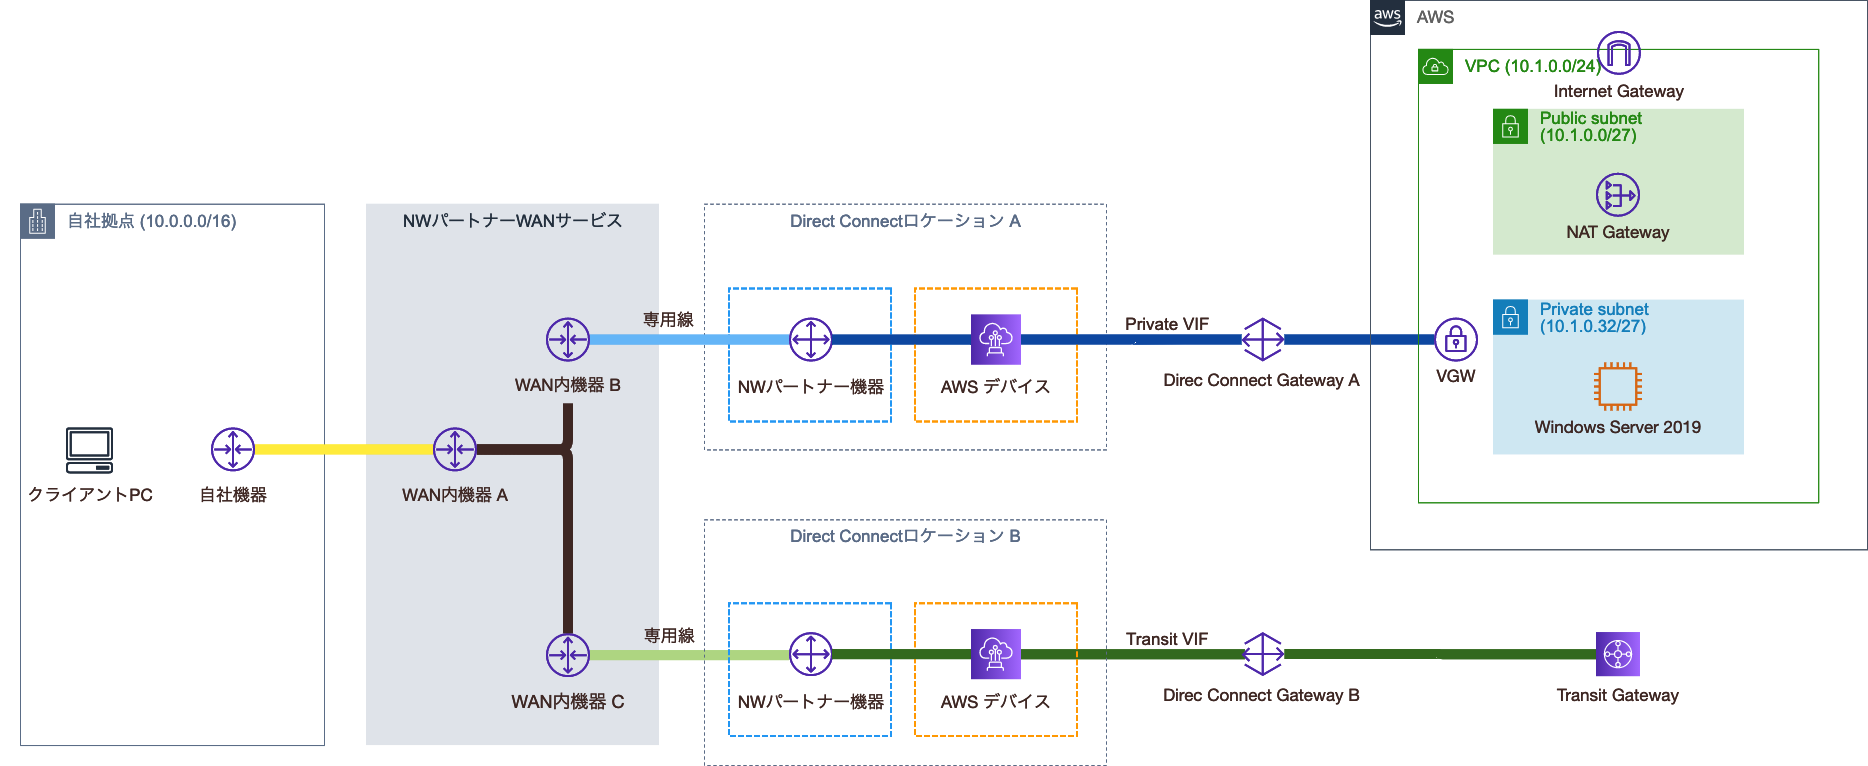 Direct Connect GatewayとTransit Gateway関連付け後の構成図